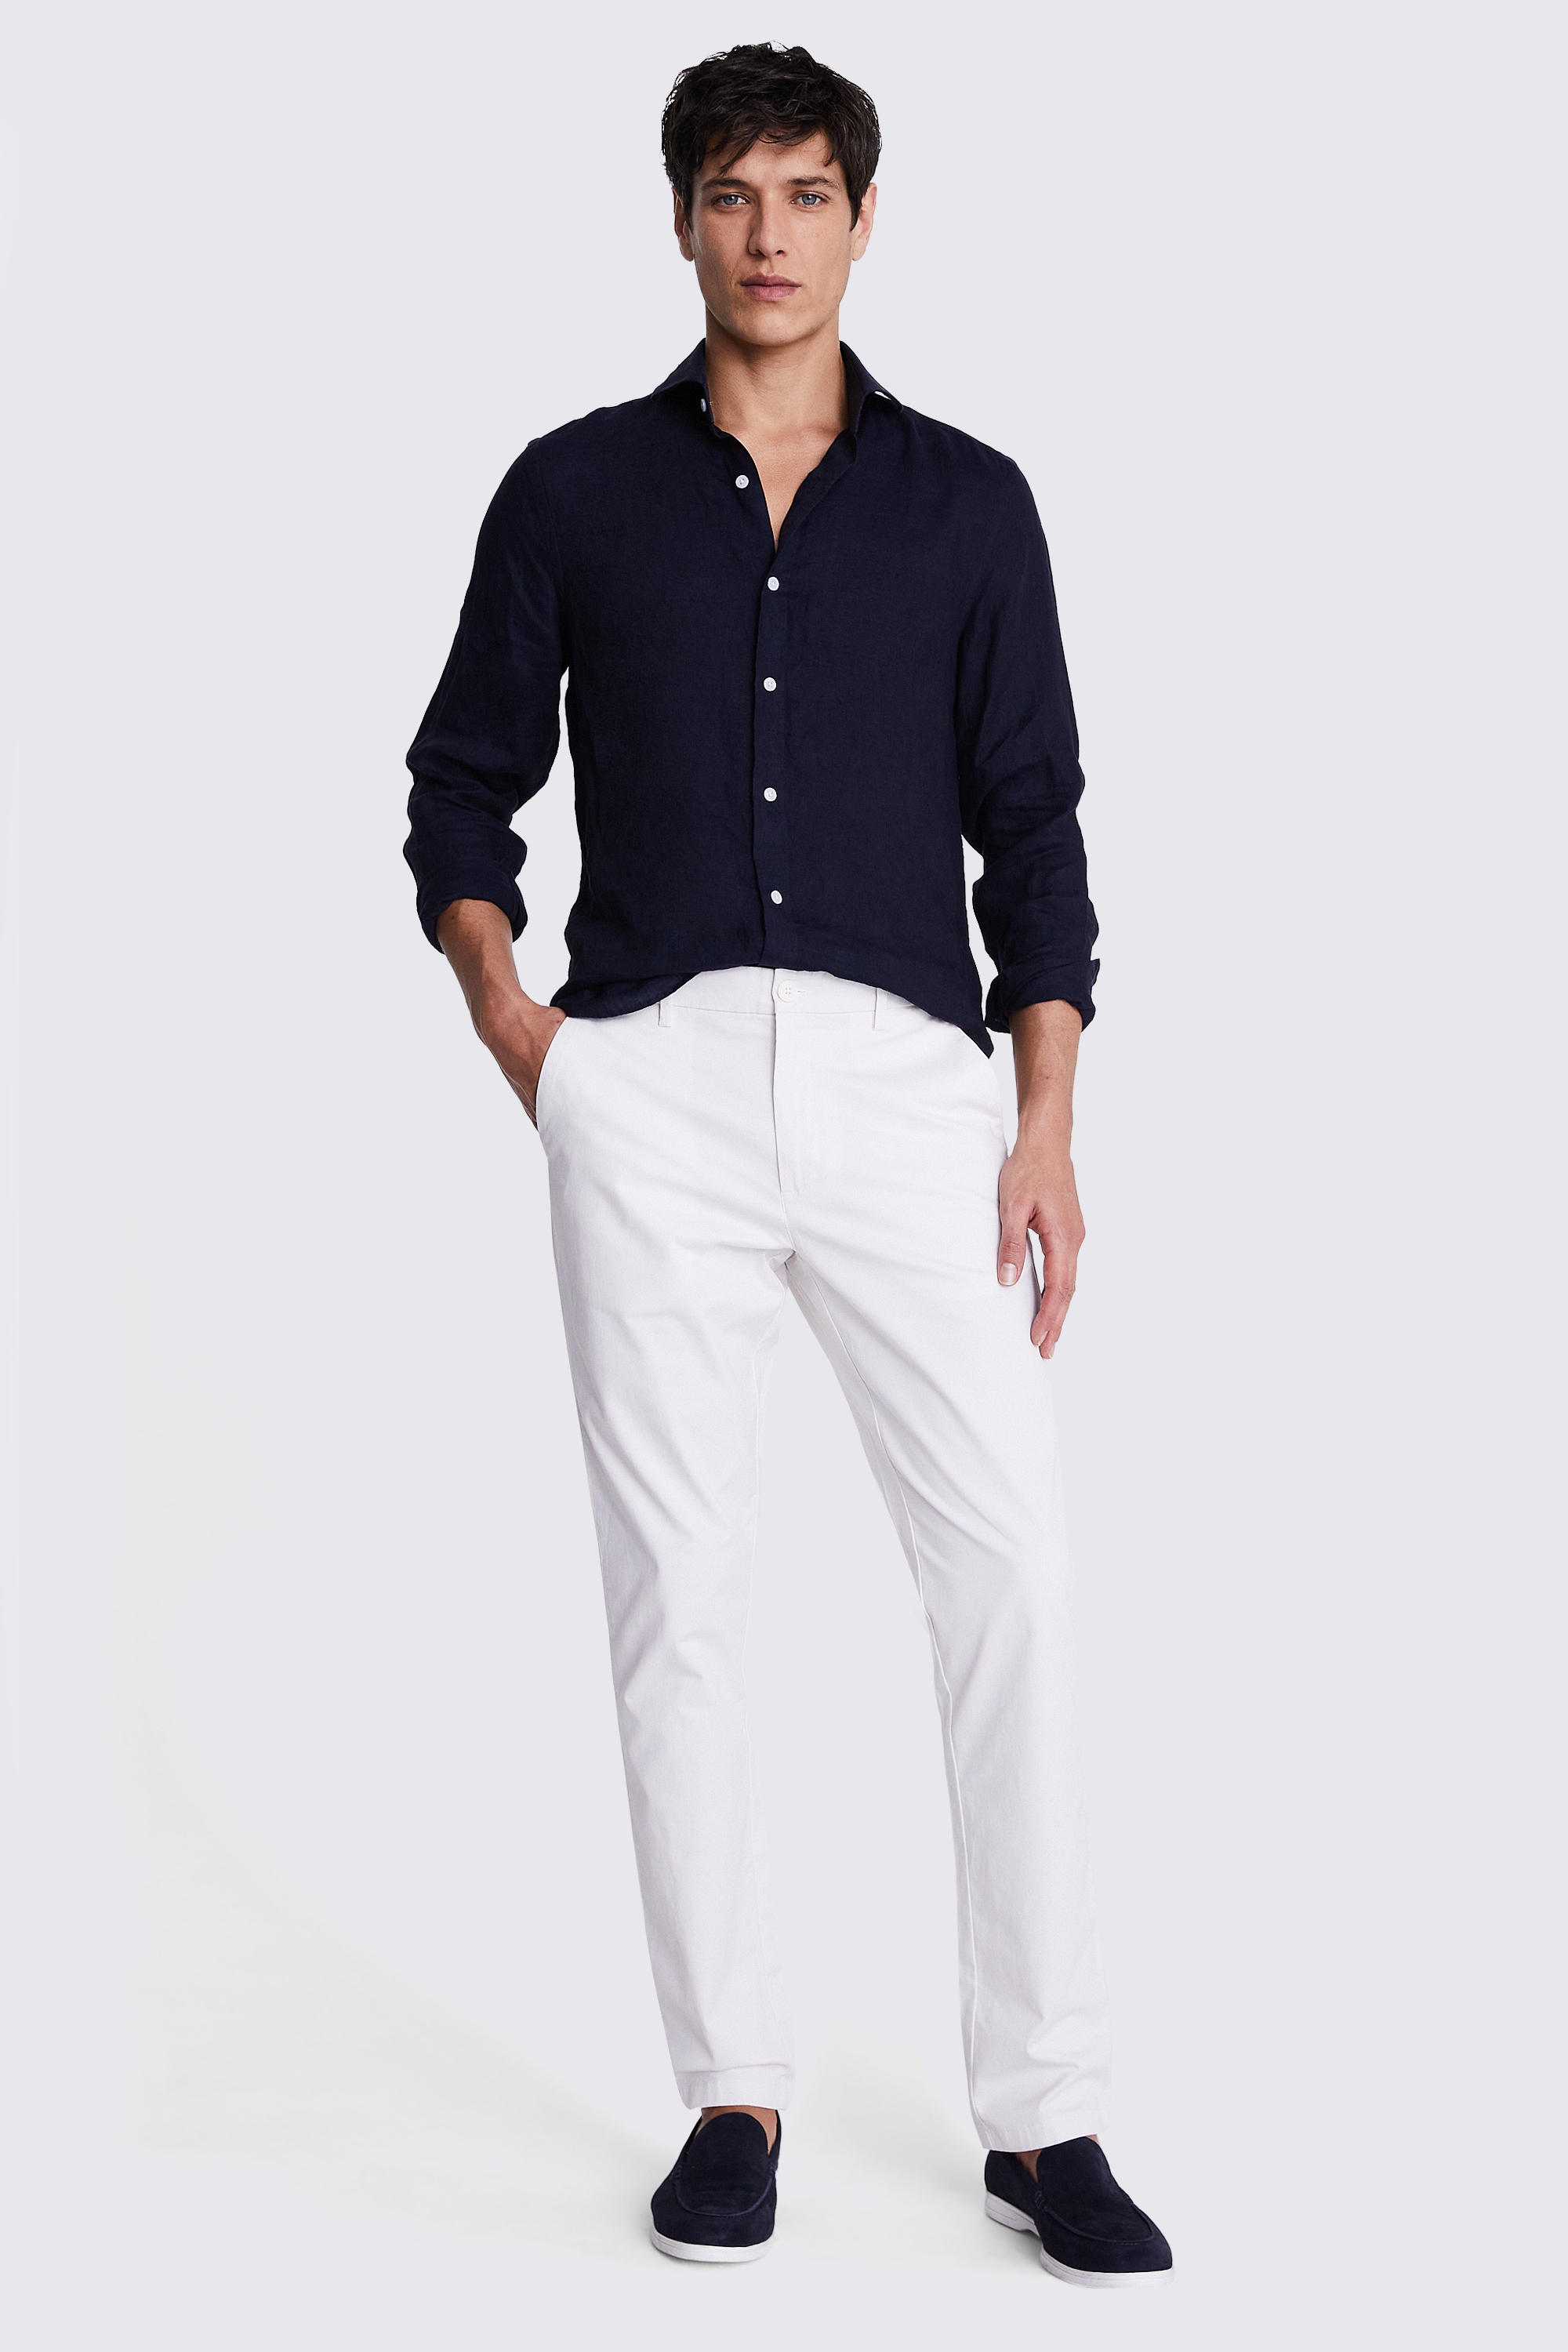 Tailored Fit Navy Linen Shirt | Buy Online at Moss